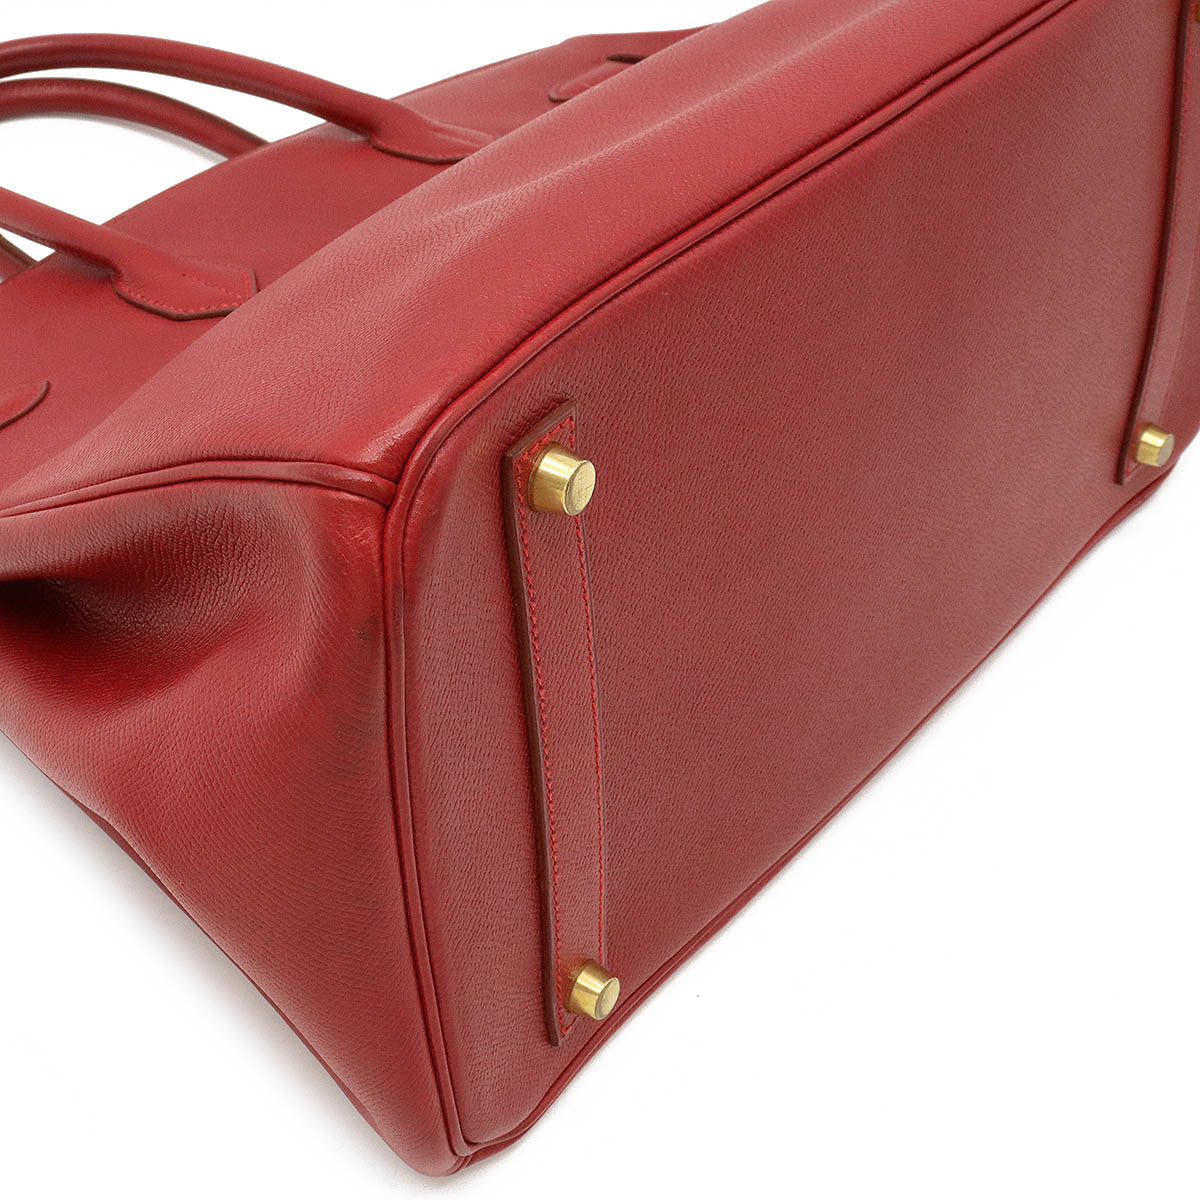 Hermes Birkin 35 Handbag Couchevel Leather Rouge